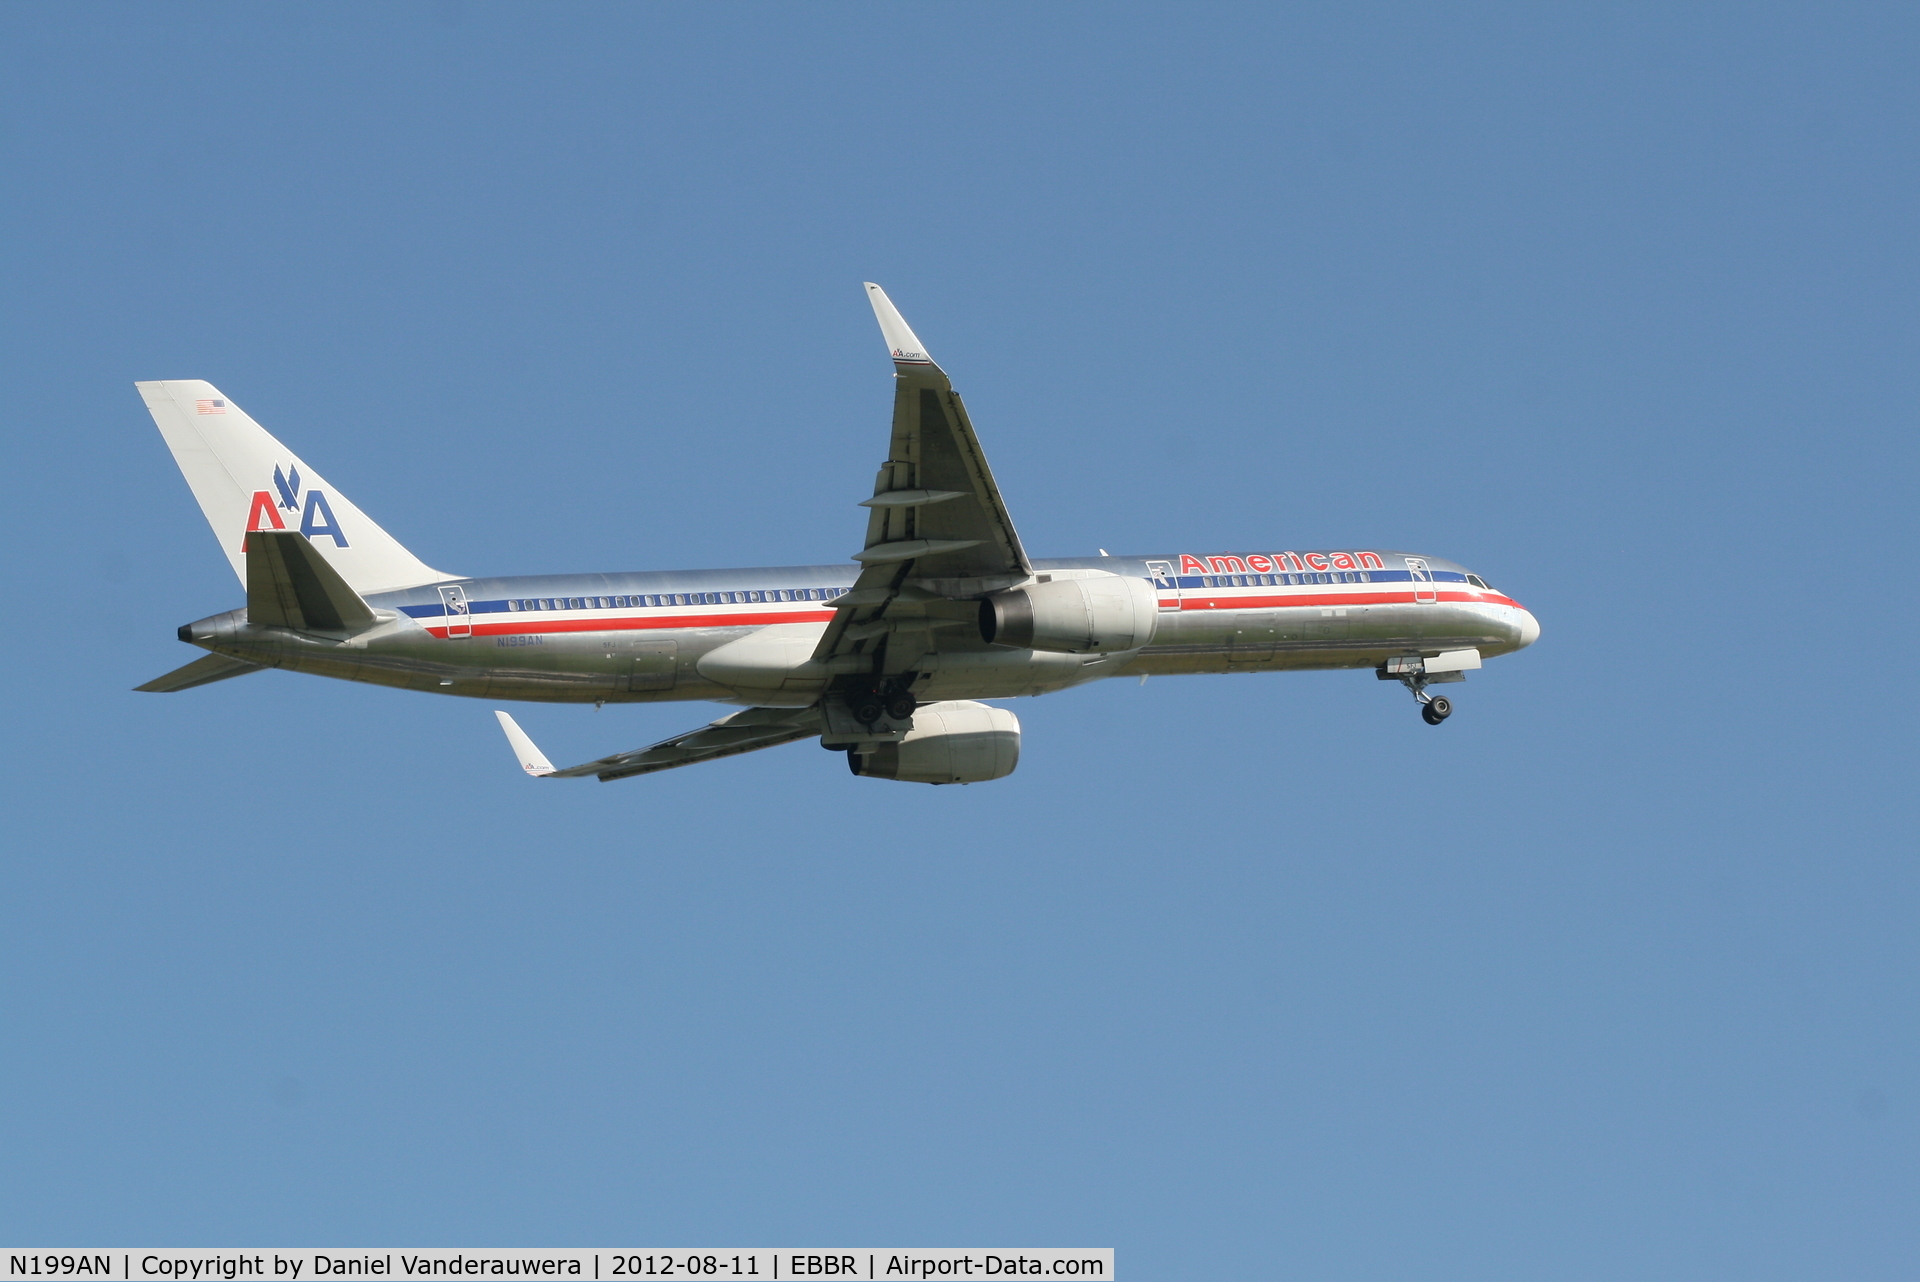 N199AN, 2001 Boeing 757-223 C/N 32393, Flight AA171 is climbing from RWY 07R